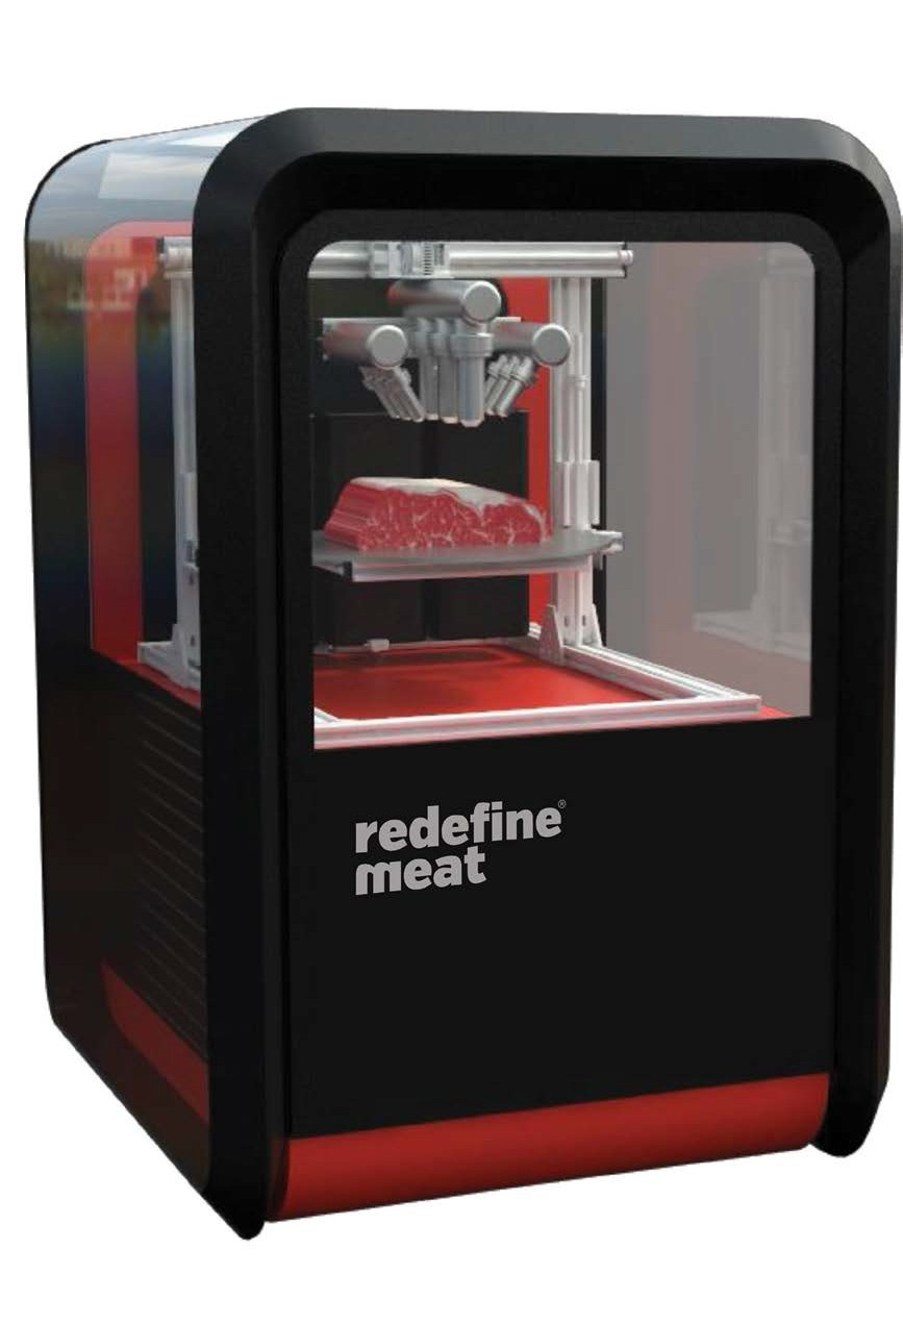 Redefine Meat’s Alternative Meat 3D Printer